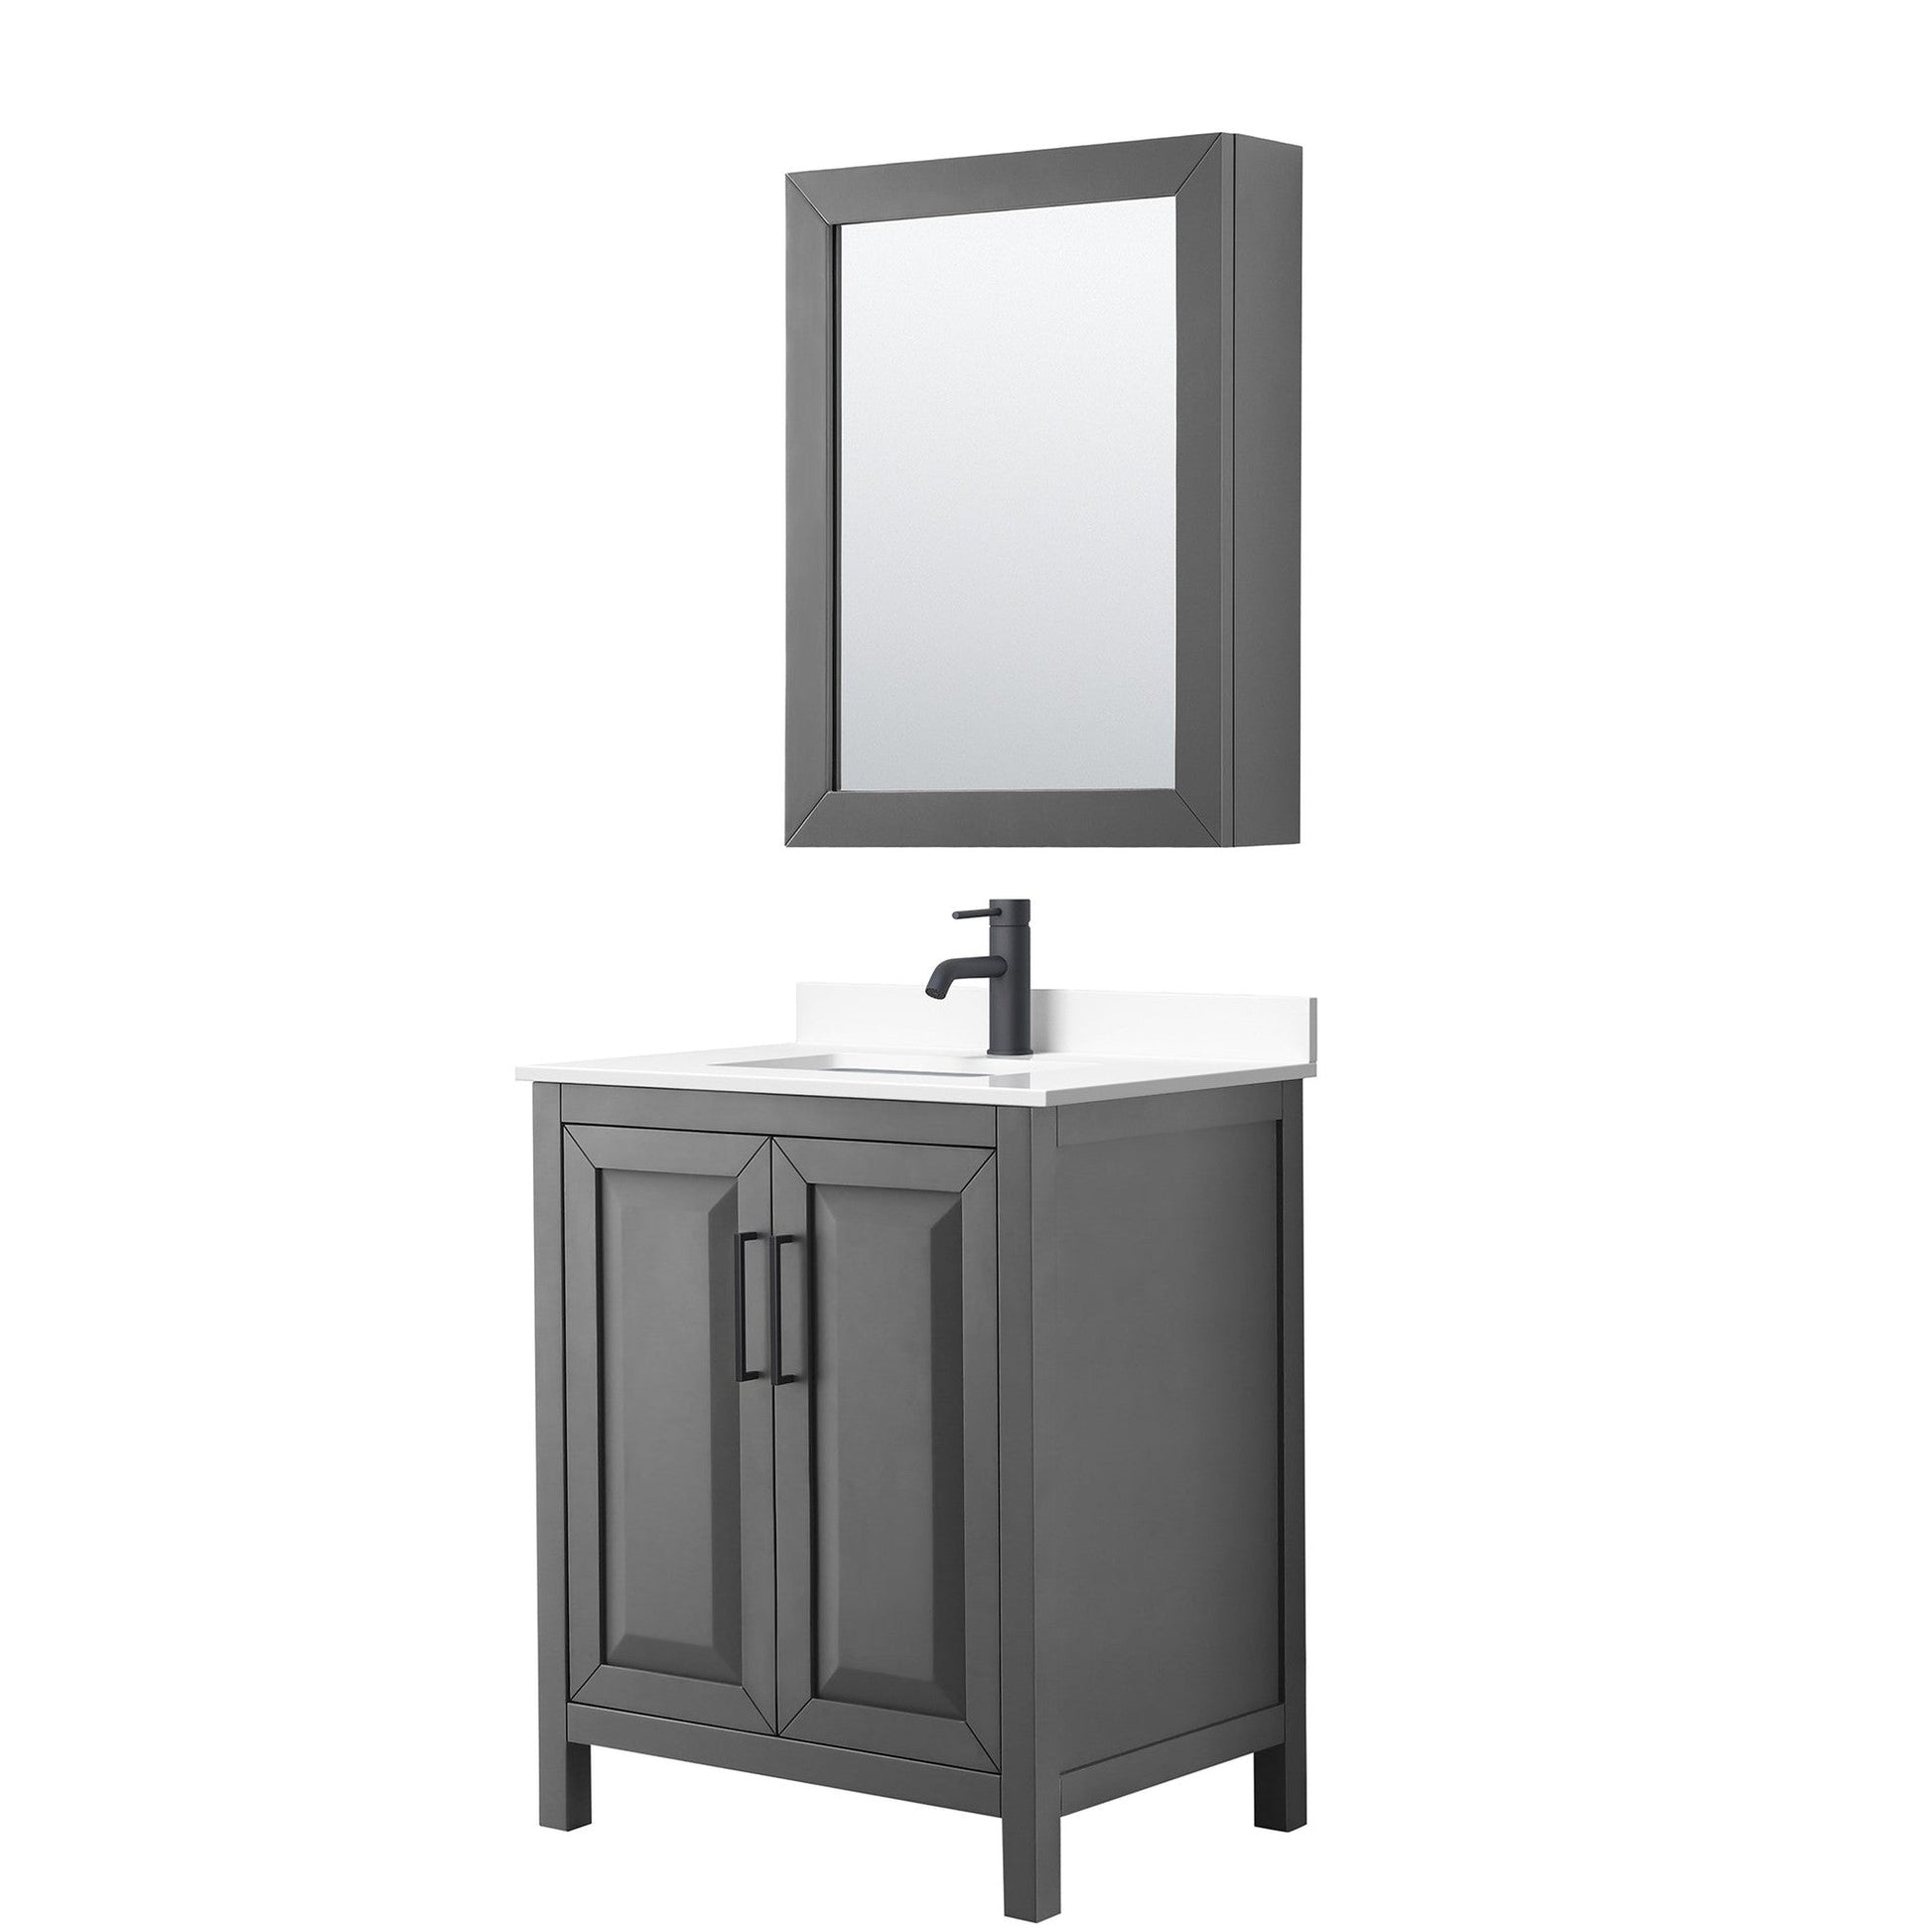 Daria 30" Single Bathroom Vanity in Dark Gray, White Cultured Marble Countertop, Undermount Square Sink, Matte Black Trim, Medicine Cabinet